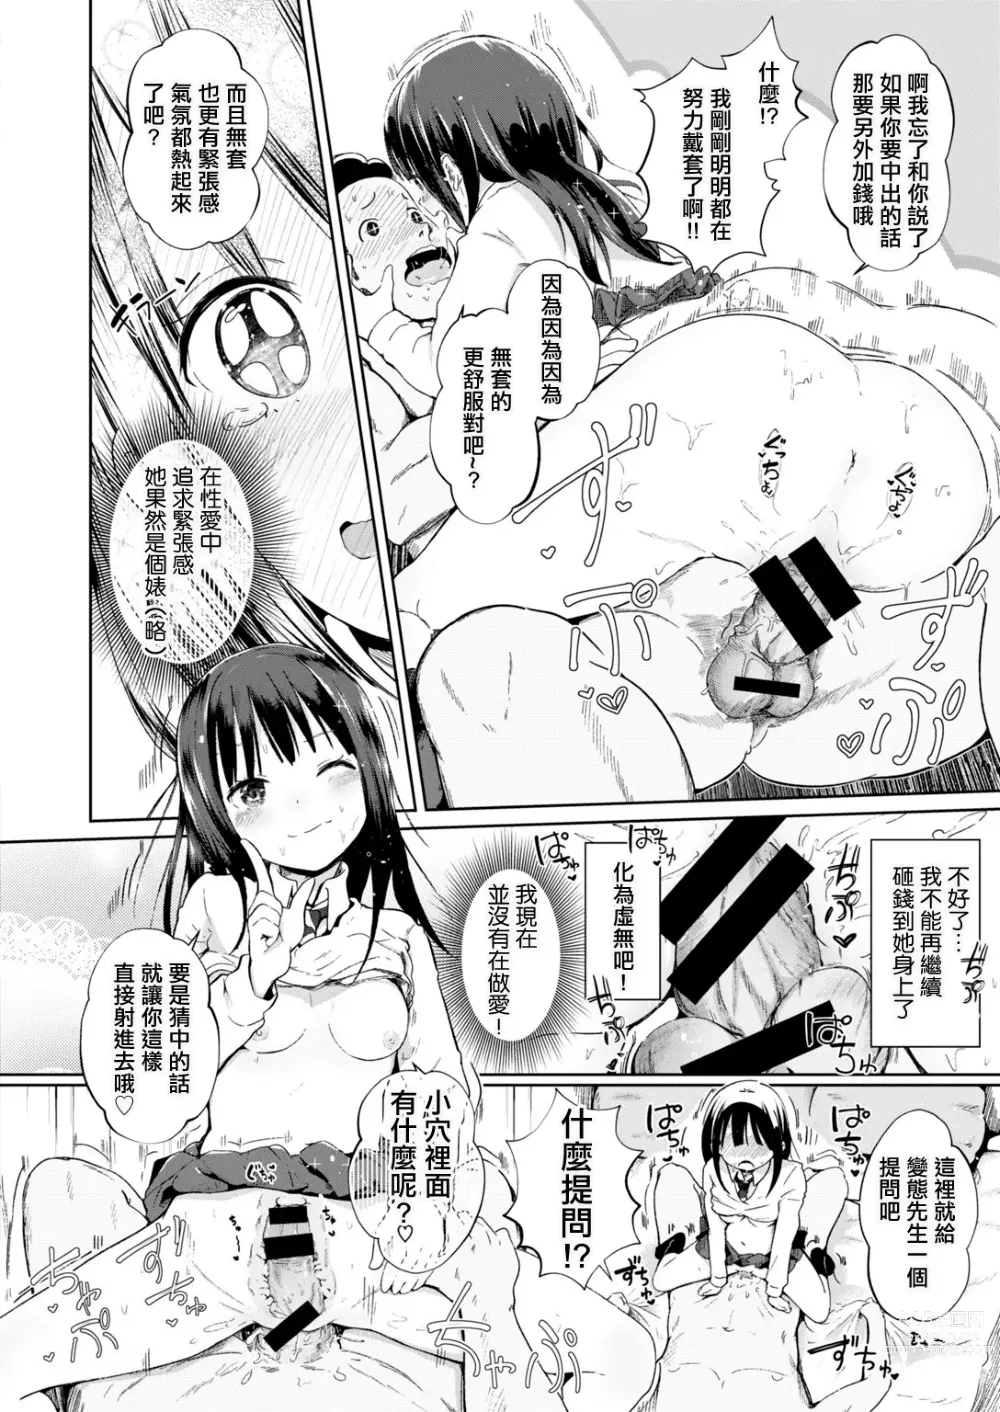 Page 14 of manga  事件發生!! ~可疑人物和箱子裡面~